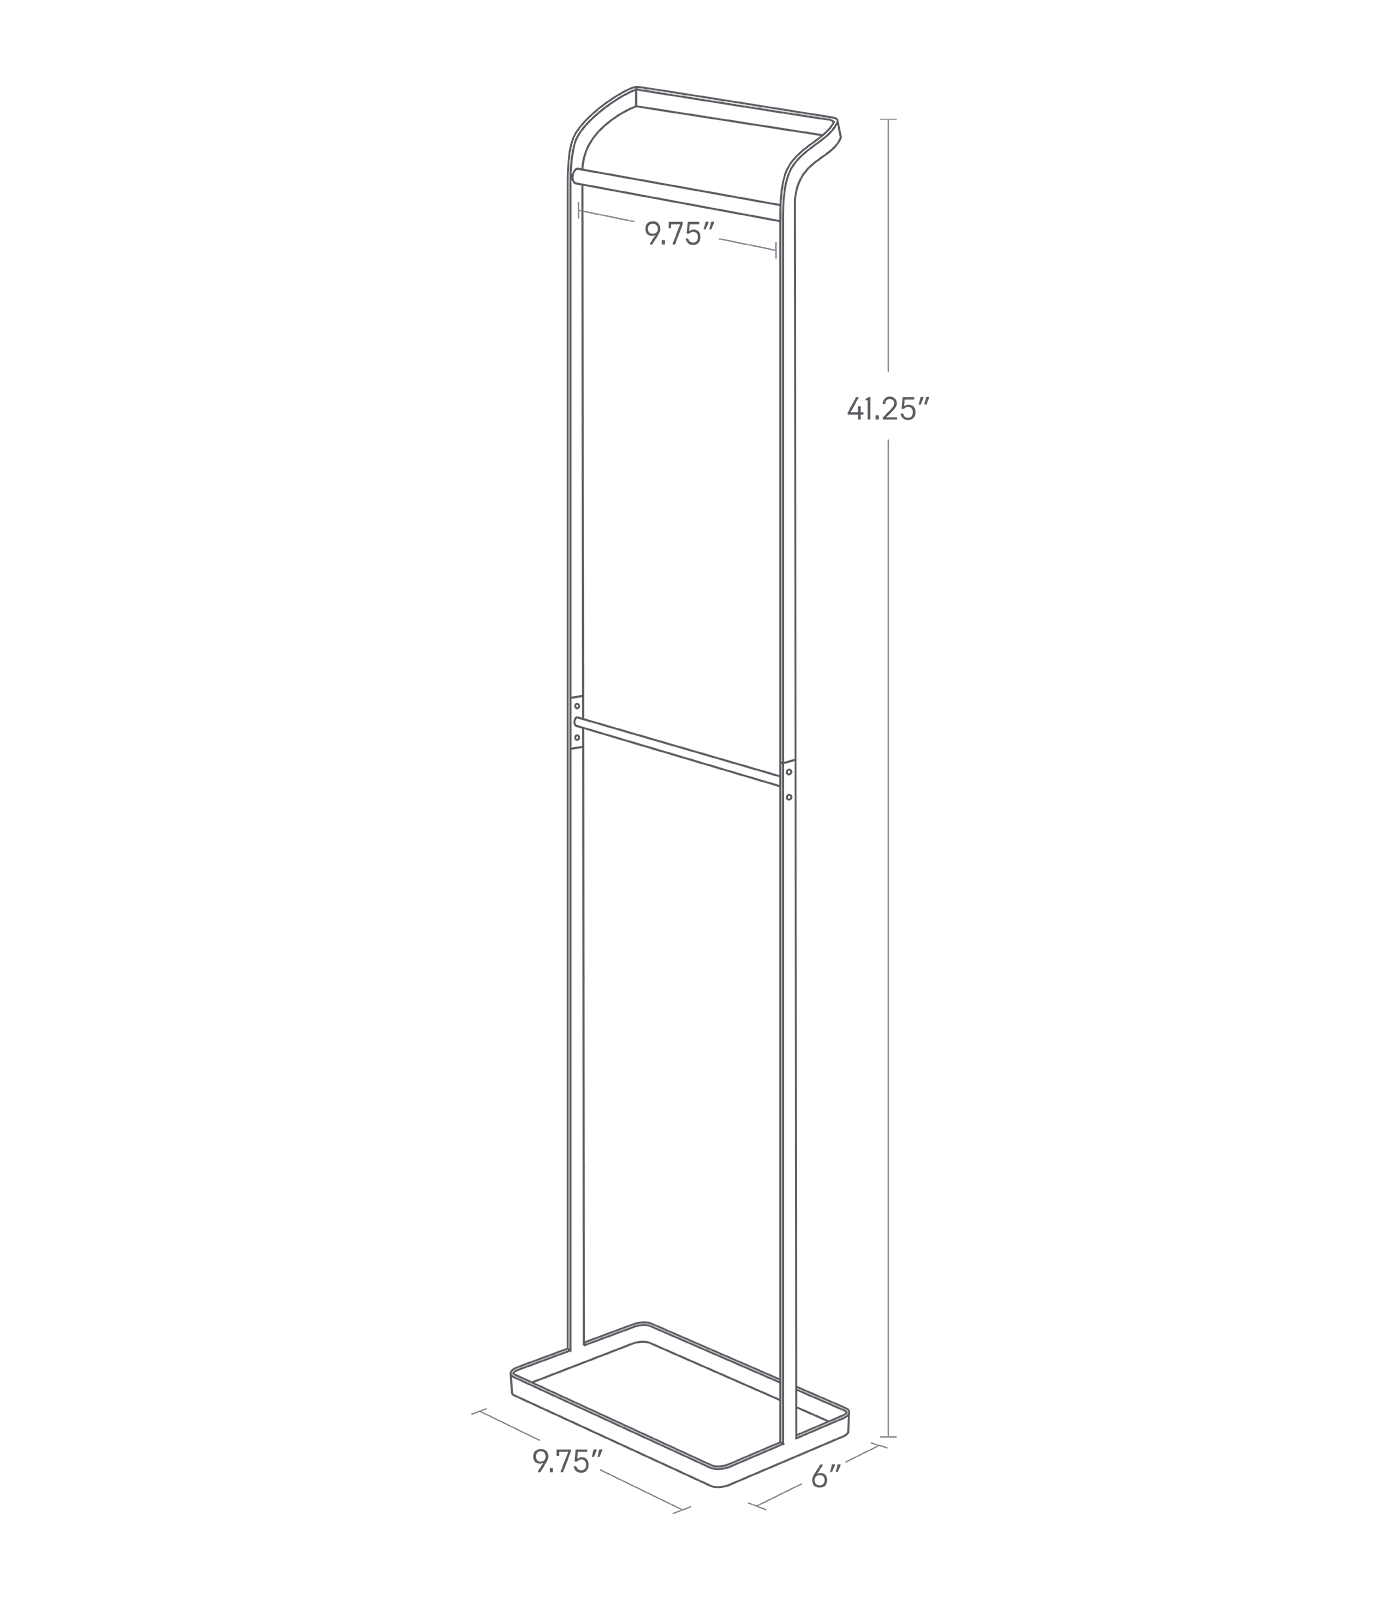 Dimension image for Hanging Umbrella Holder showing a length of 9.75